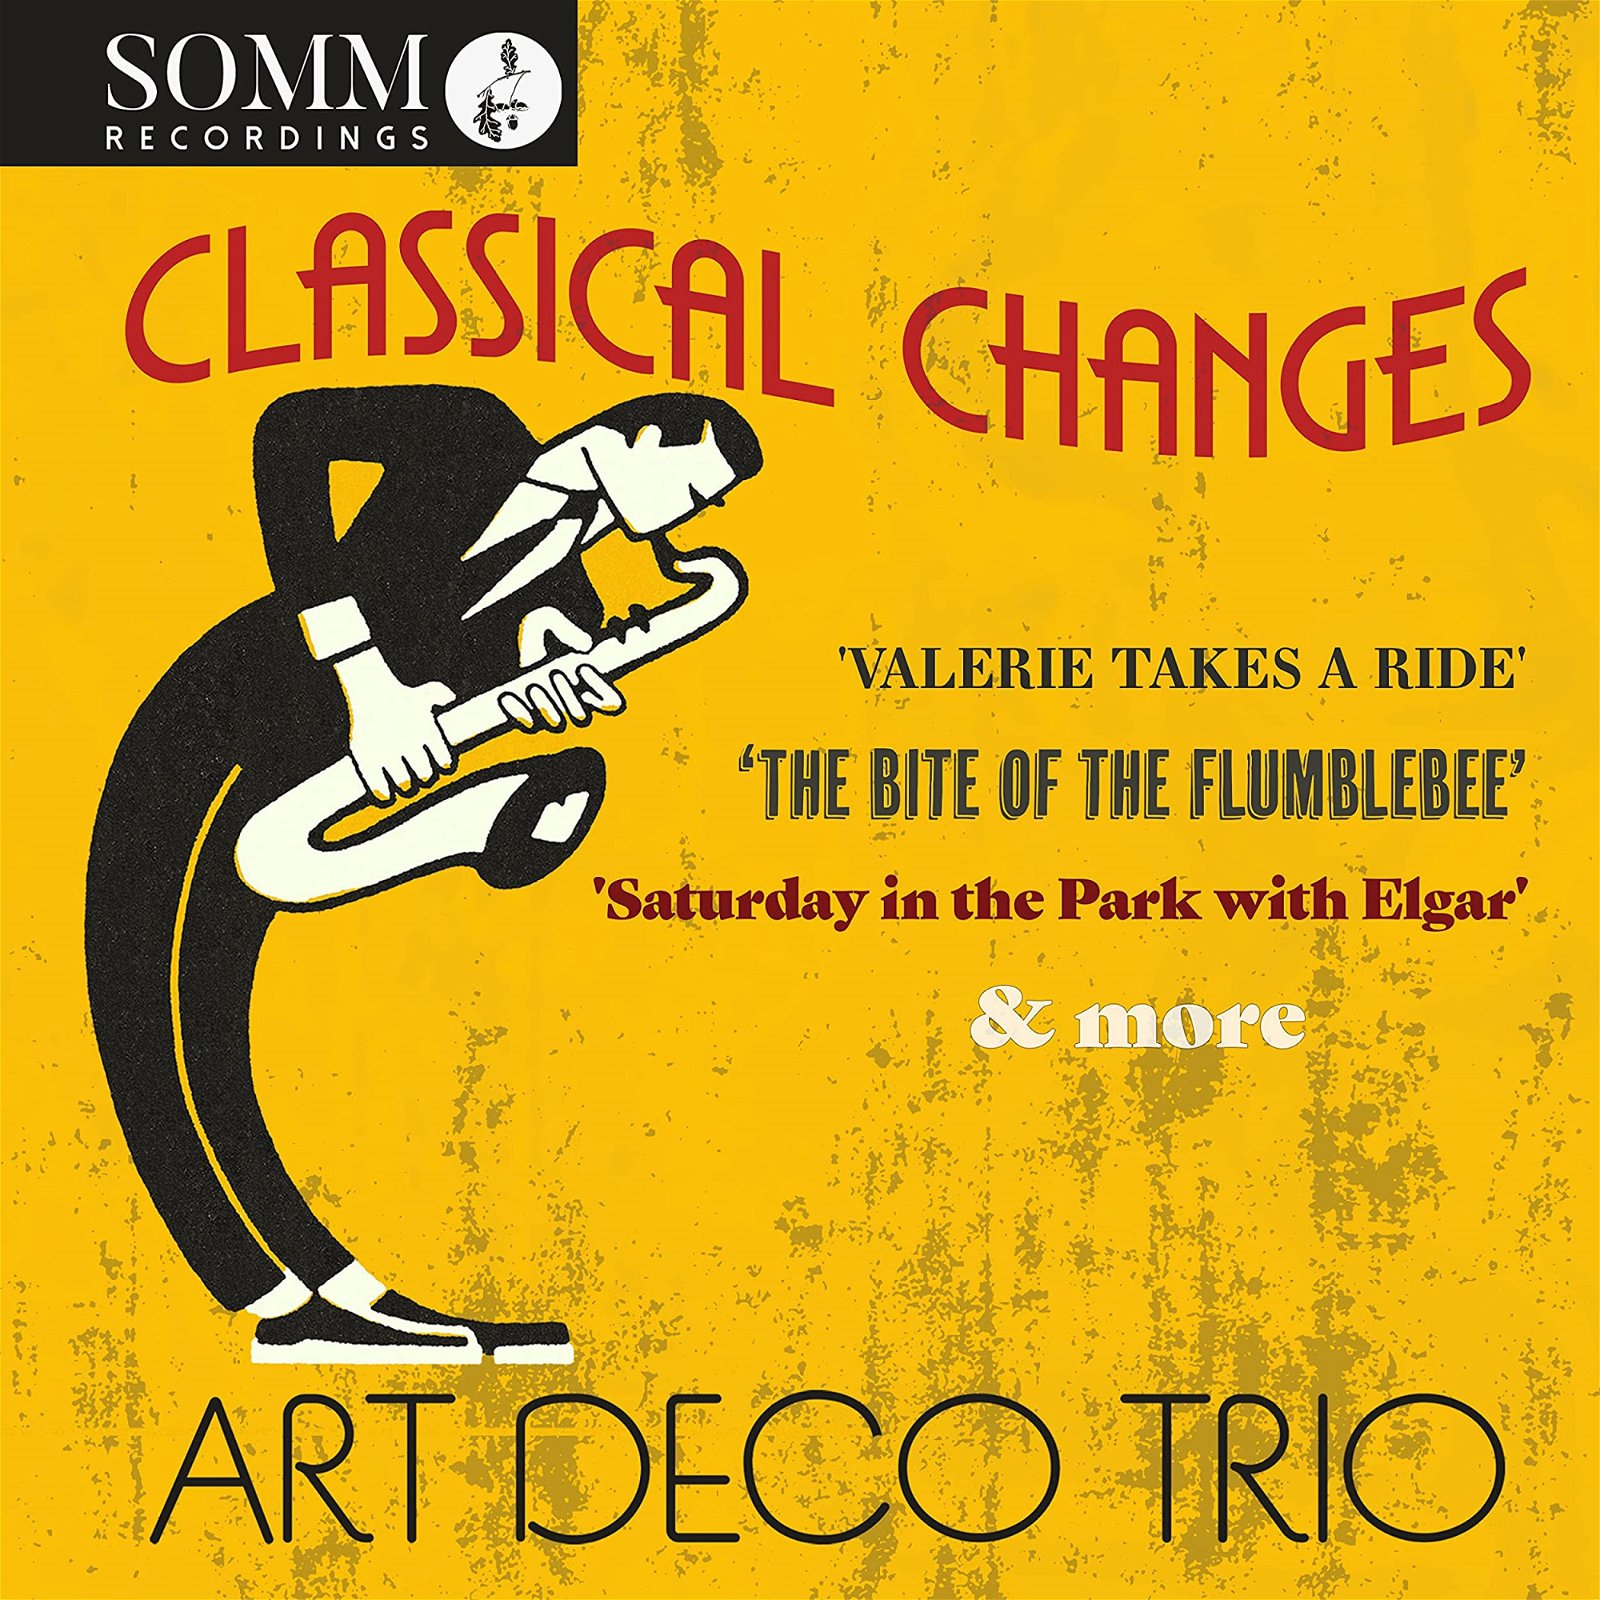 CD Shop - ART DECO TRIO FARRINGTON: CLASSICAL CHANGES